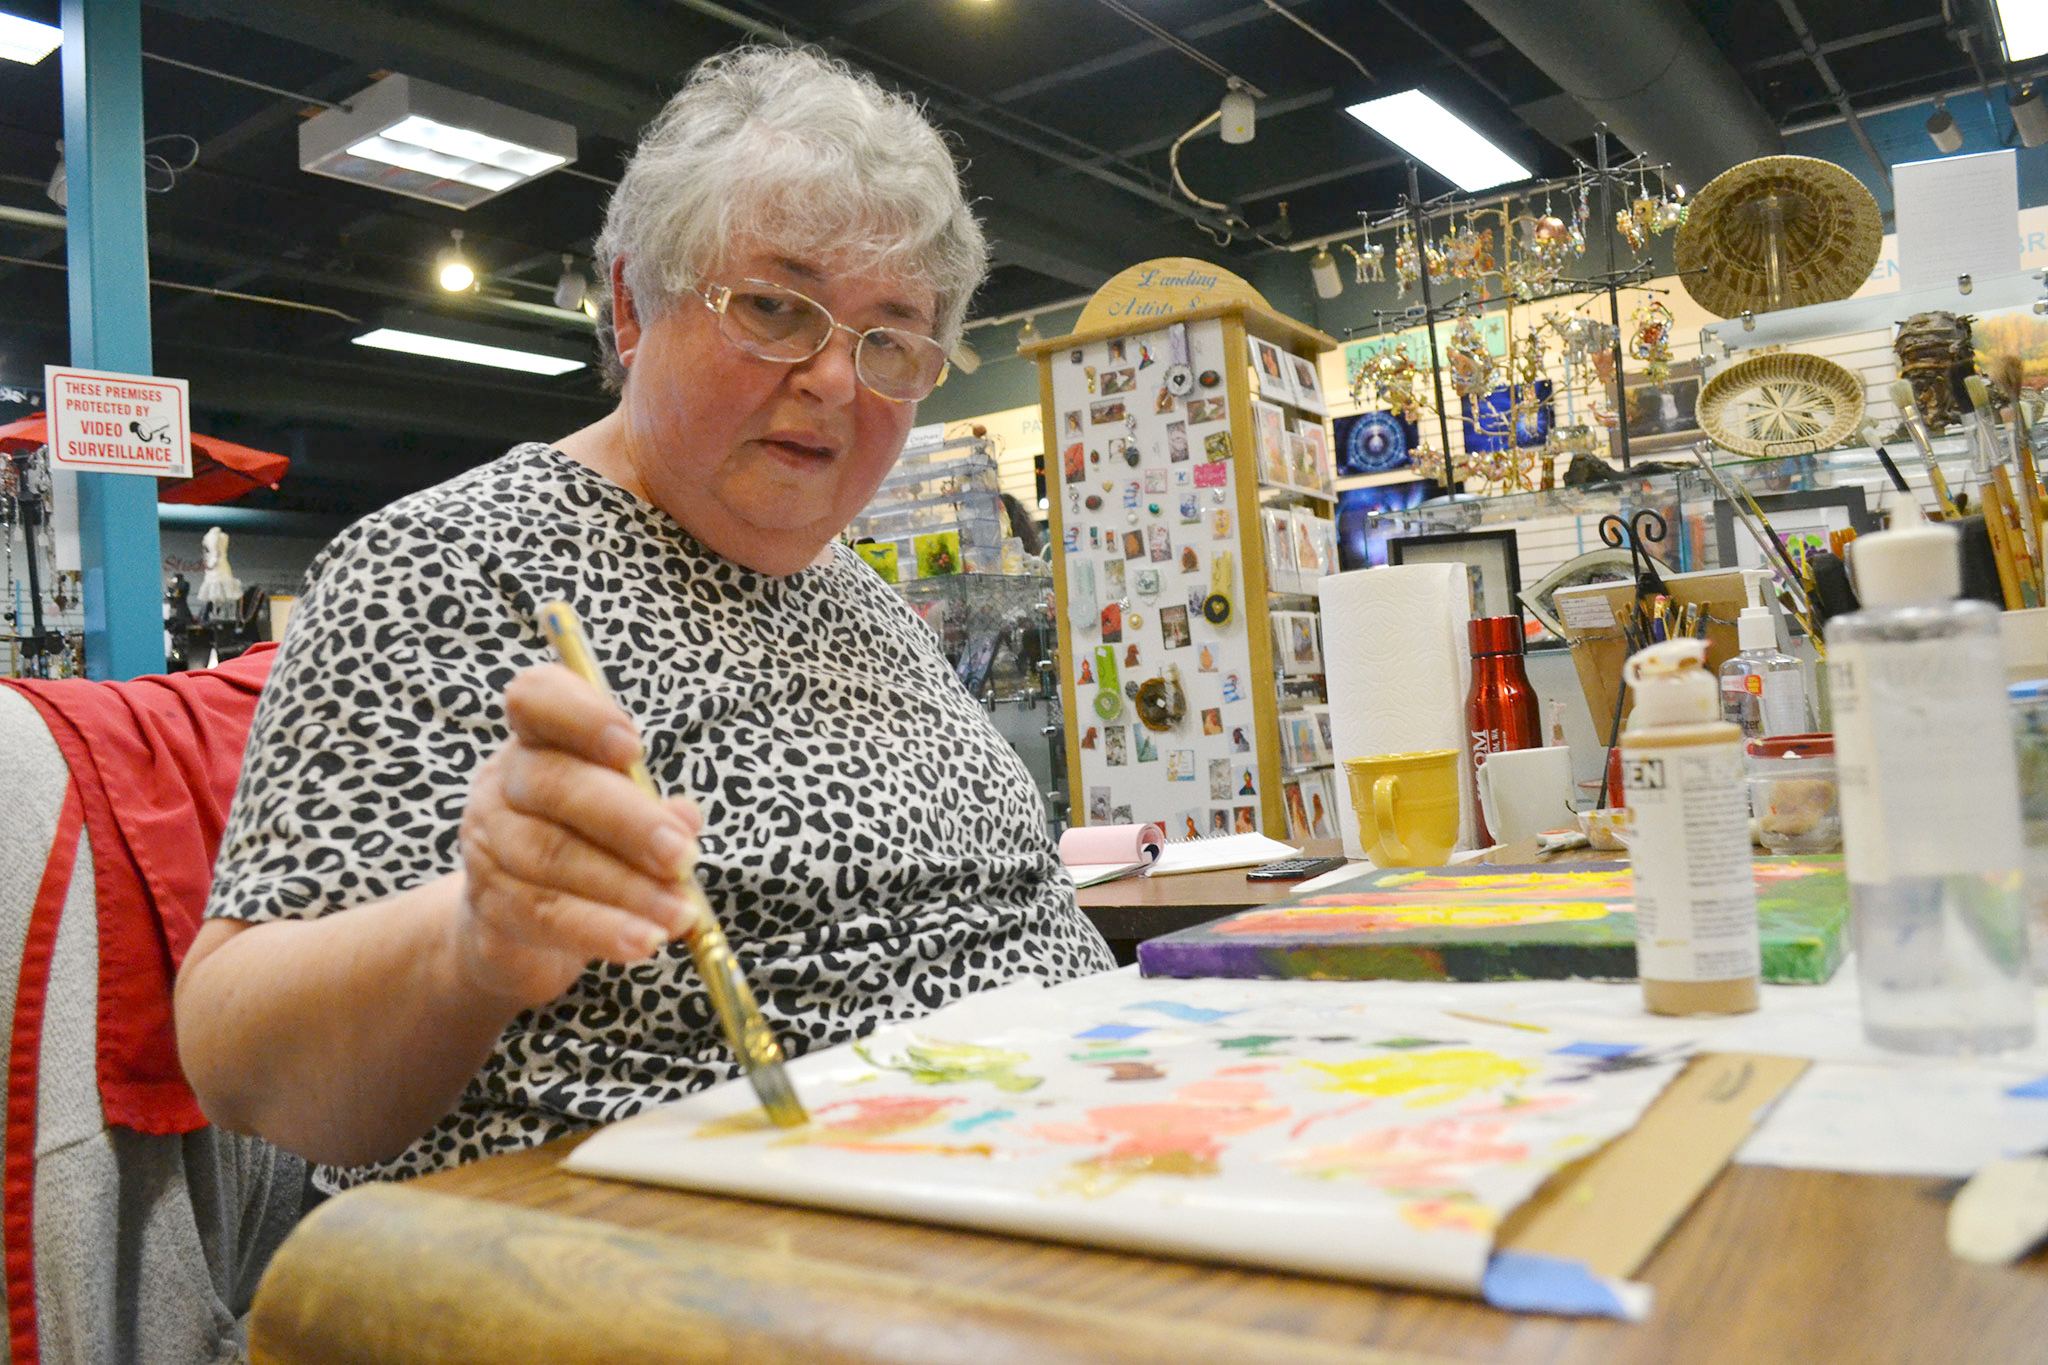 Sequim artist switches hands, finds new goals after stroke